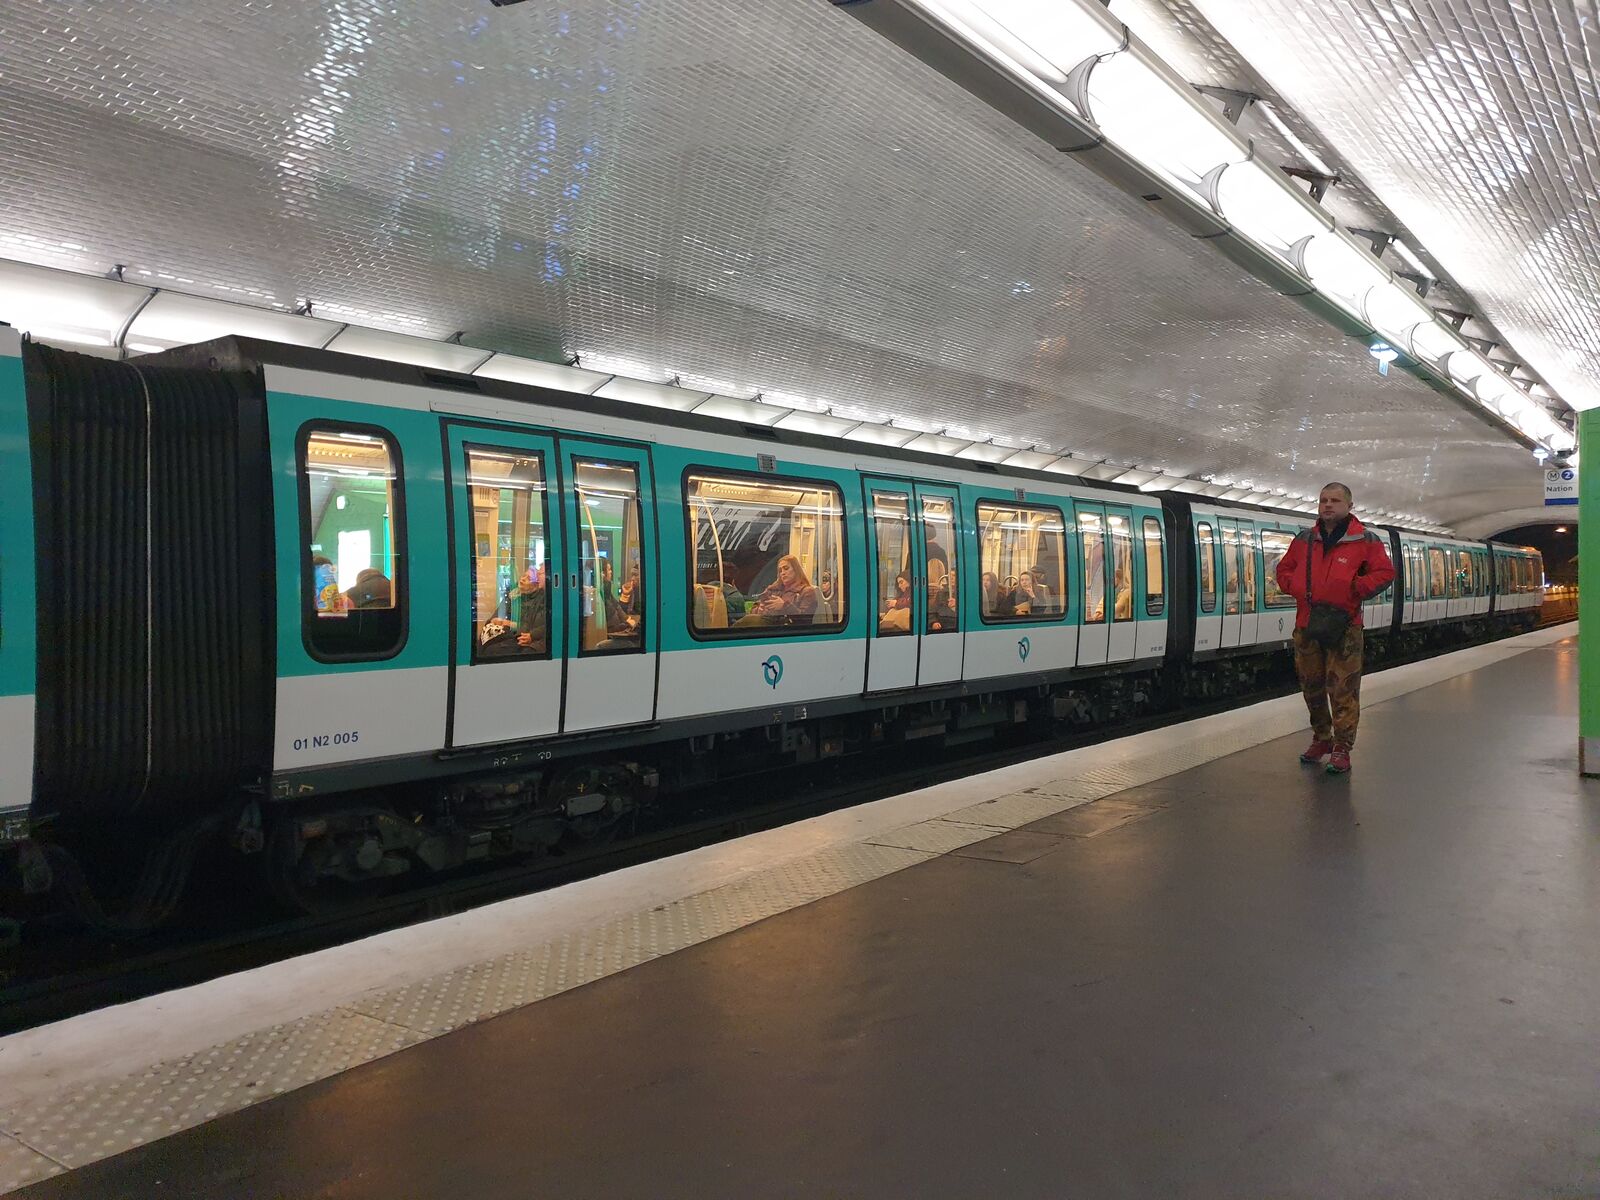 This train of the Paris Metro runs on tyres.